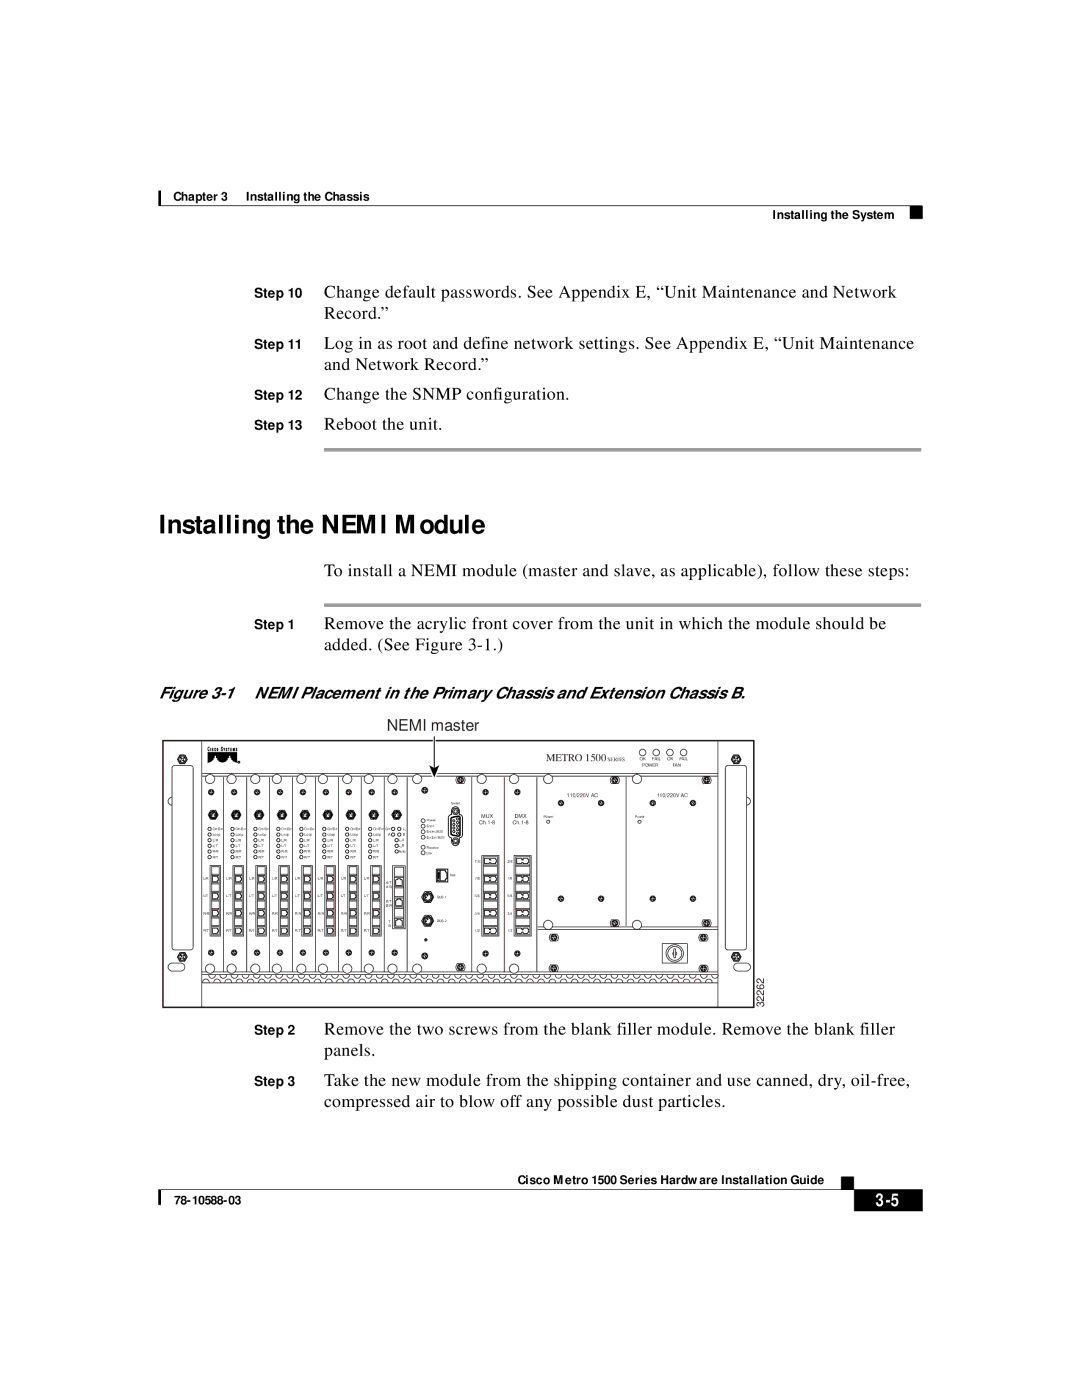 Cisco Systems 78-10588-03 manual Installing the Nemi Module, Nemi master 